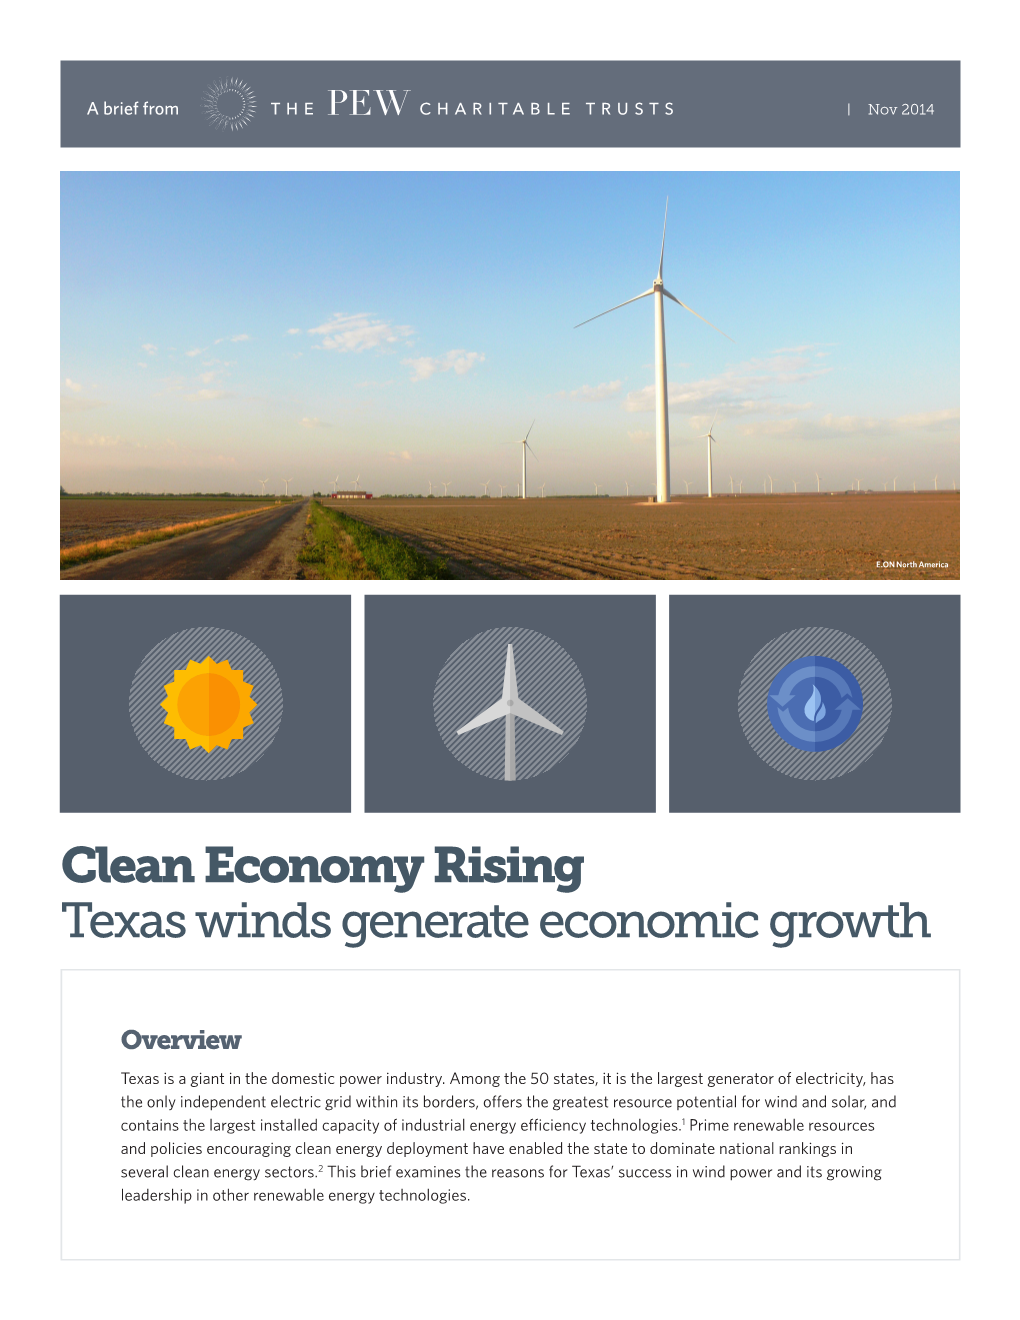 Texas Winds Generate Economic Growth (PDF)